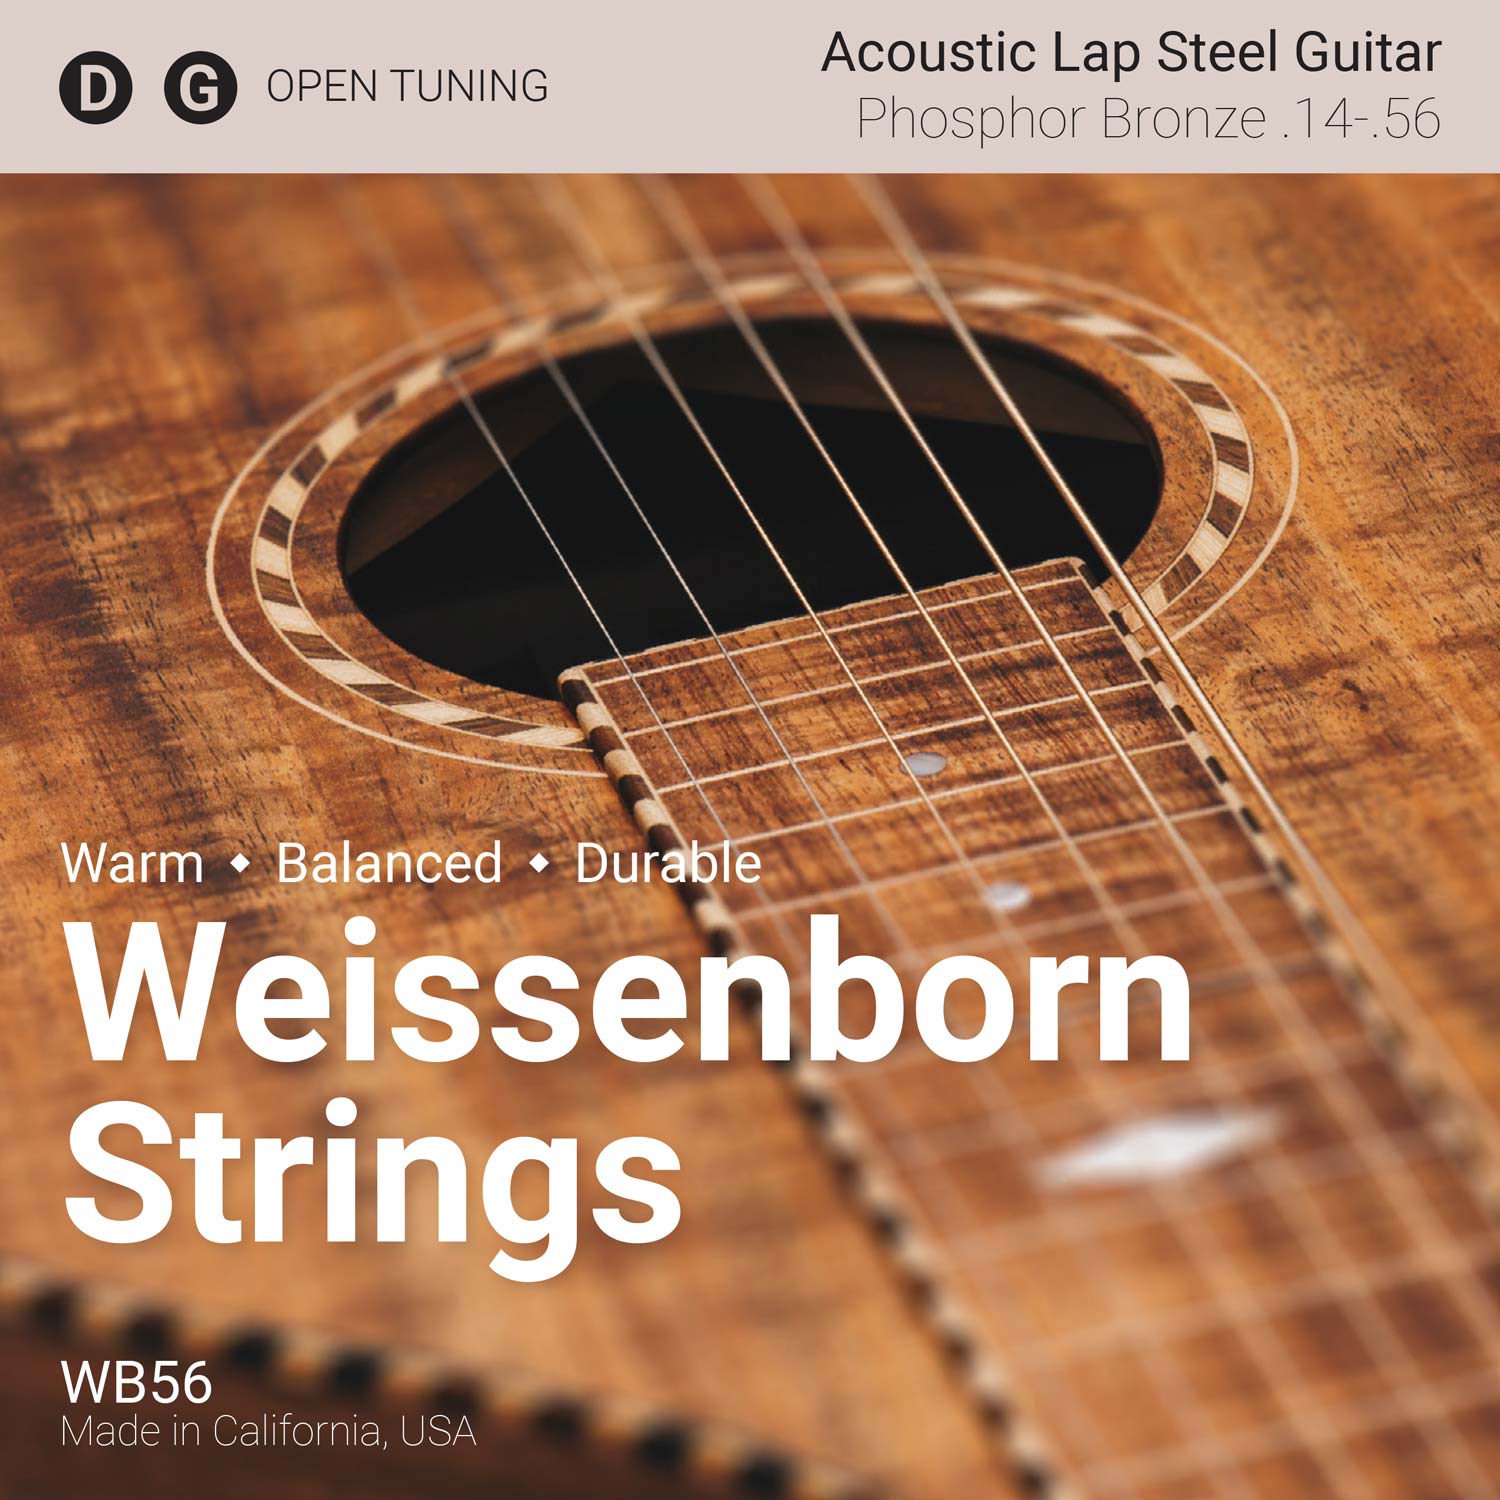 Weissenborn Strings - Open D and Open G Acoustic Lap Steel Guitar Strings - WB56